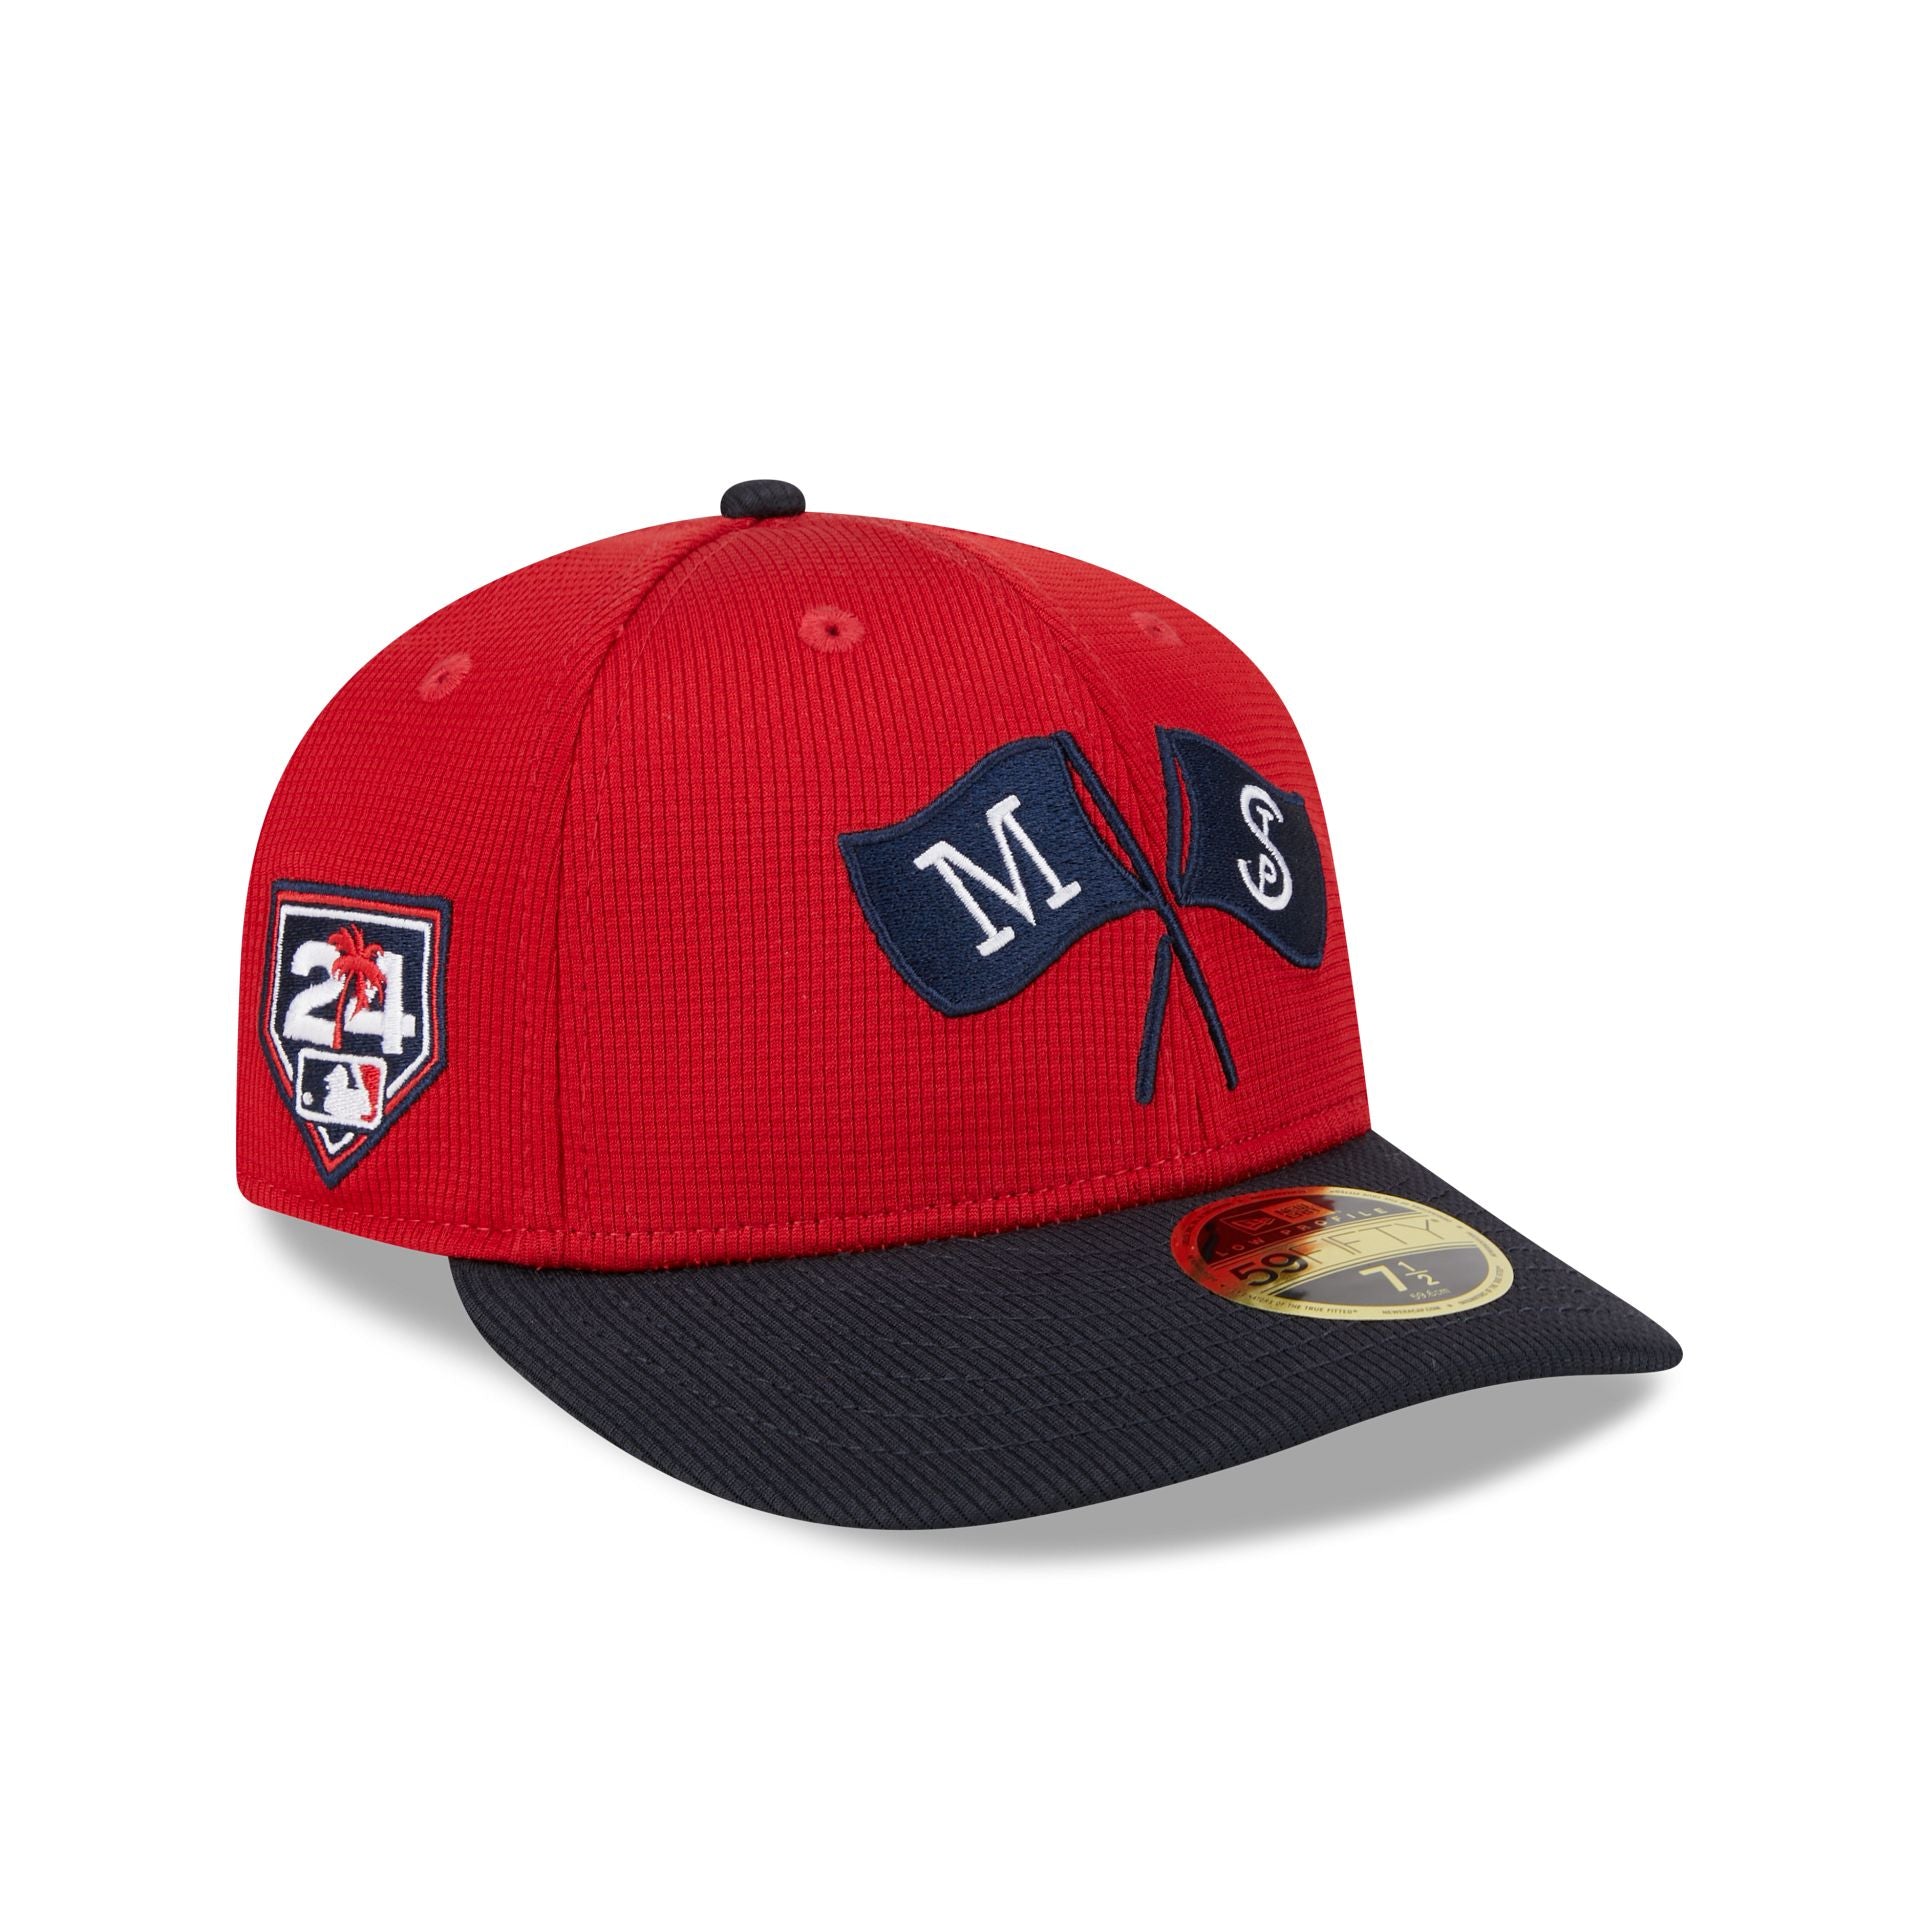 Men's New Era Navy Atlanta Braves Spring Training 9FIFTY Snapback Hat